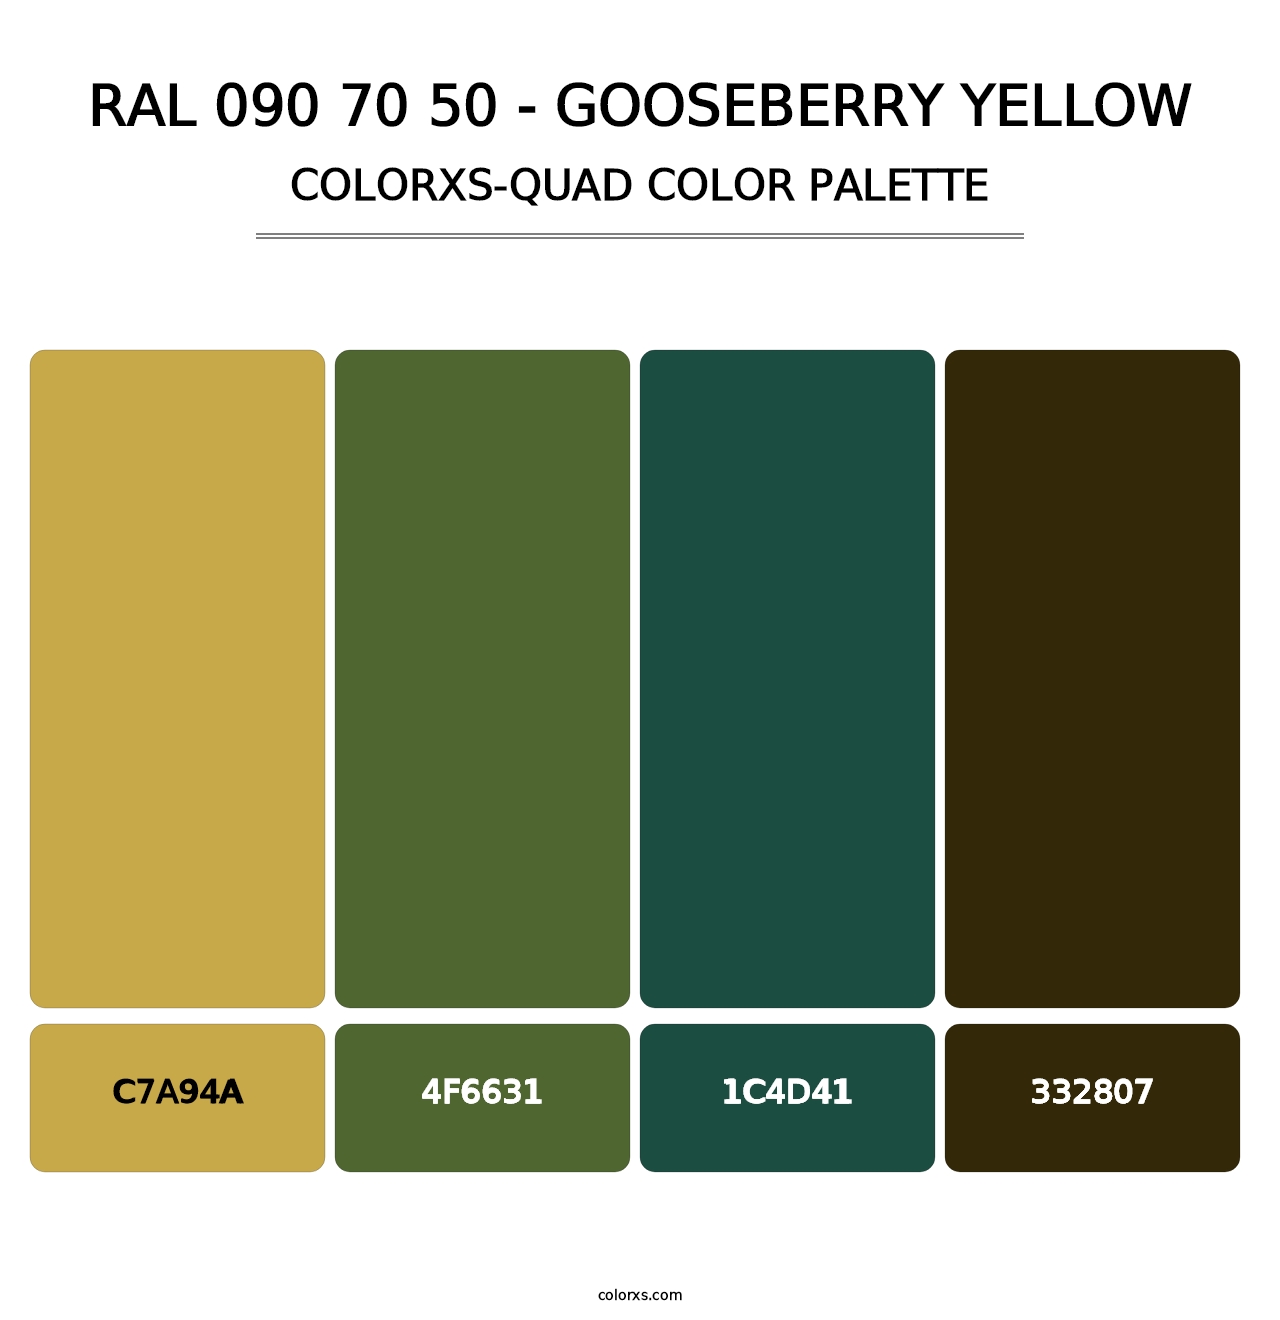 RAL 090 70 50 - Gooseberry Yellow - Colorxs Quad Palette